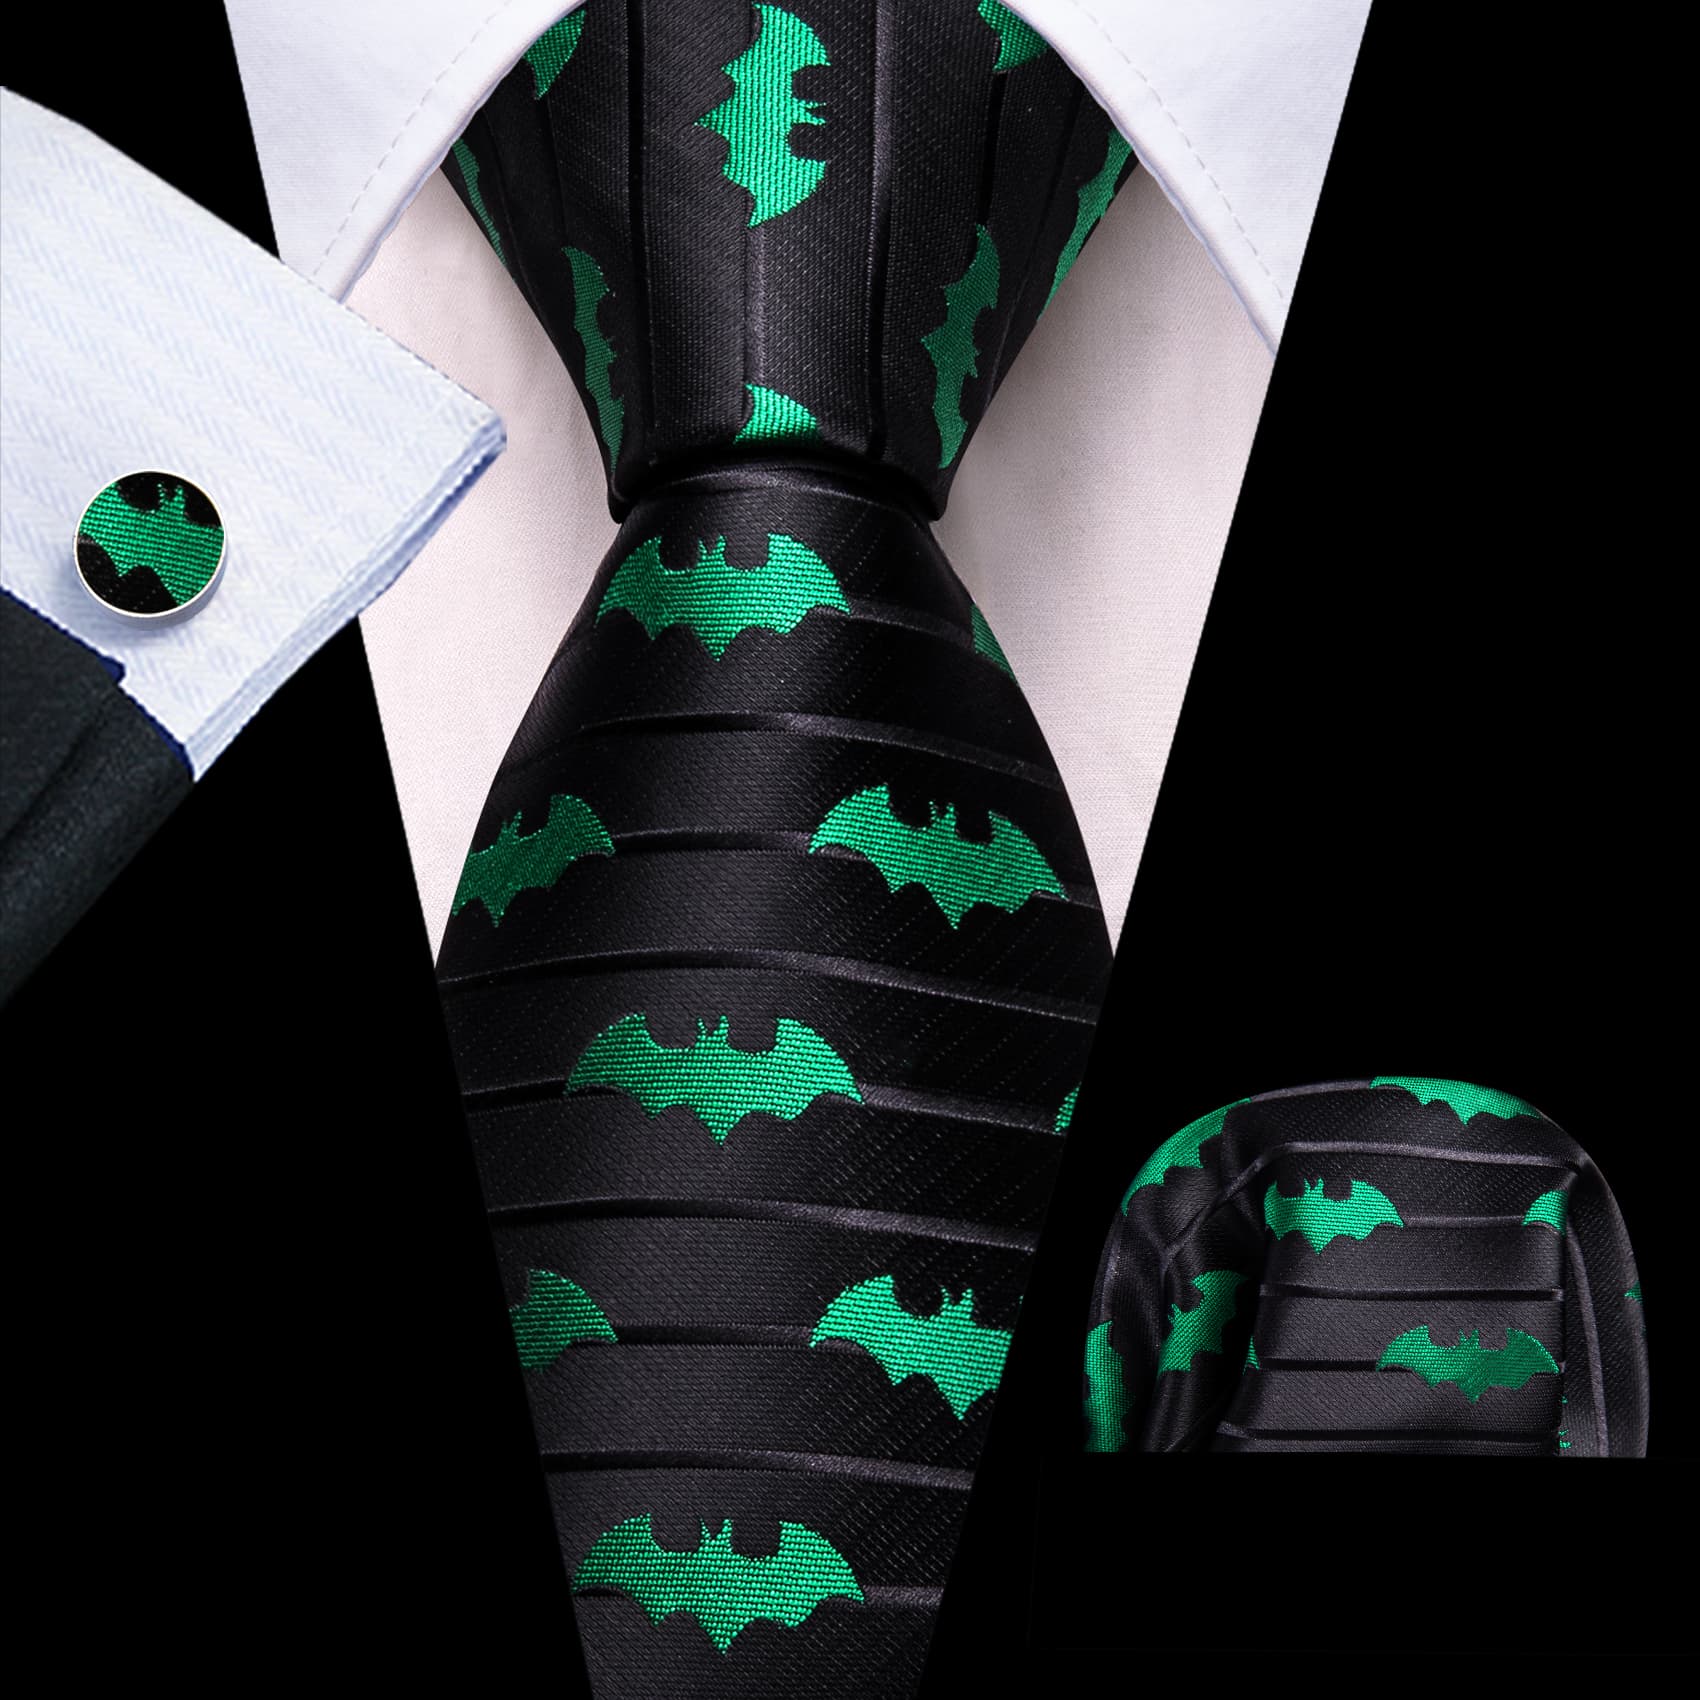  Tie Jacquard Green Bat Black Novelty Necktie Hanky Cufflinks Set